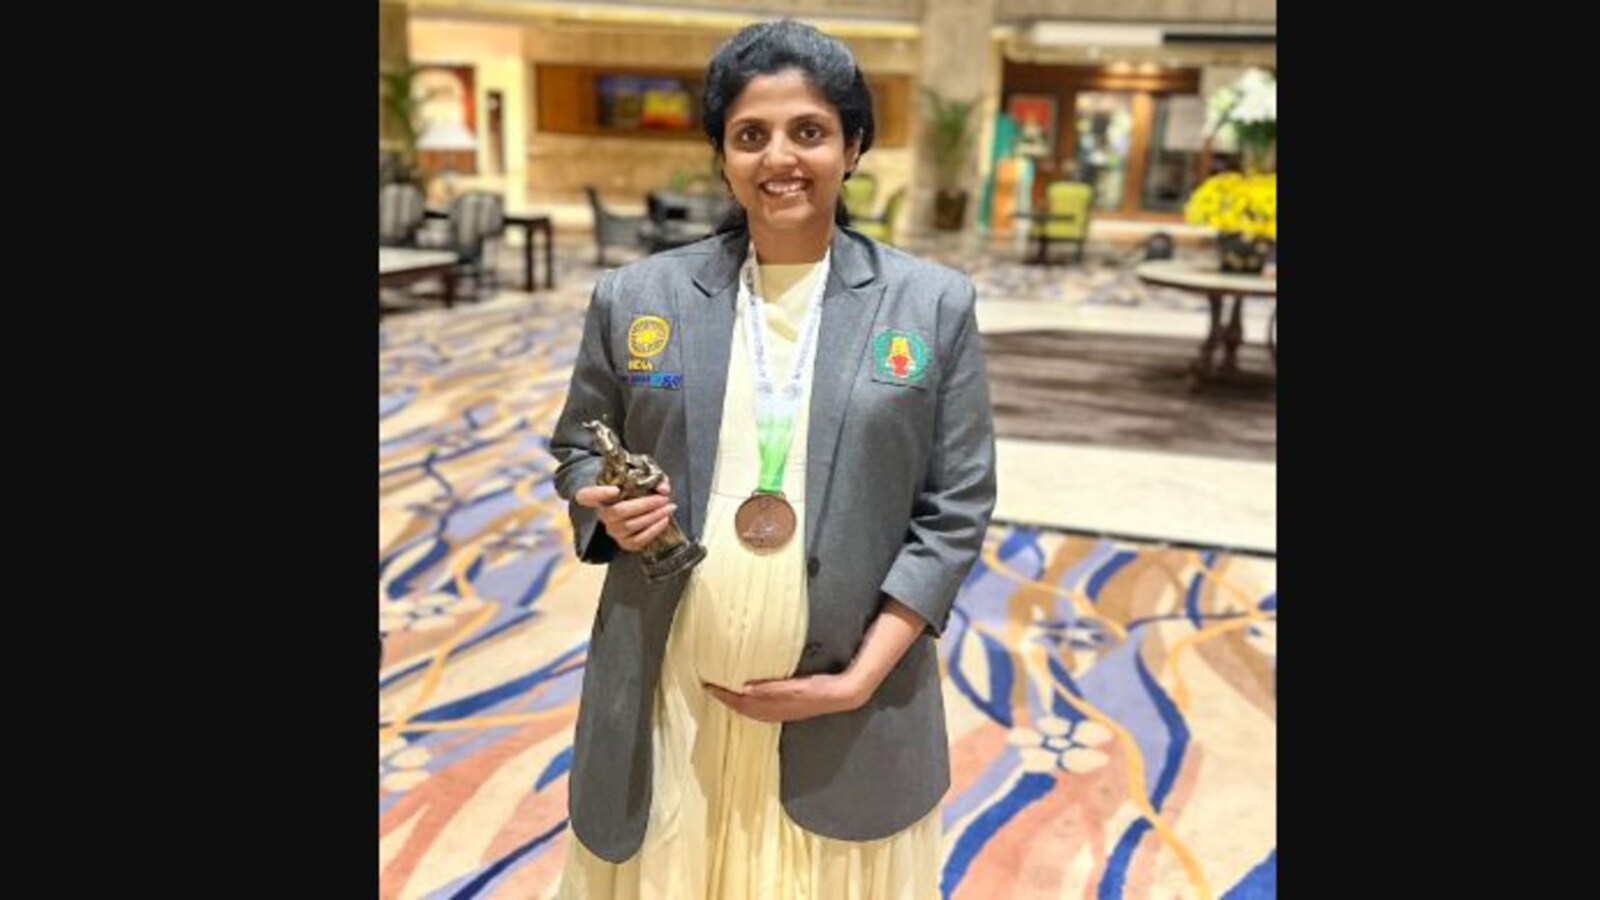 44th Chess Olympiad 2022 Chennai Pregnant Harika Dronavalli Indian Women  Team Koneru Humpy R Vaishali Tania Sachdev Bhakti Kulkarni